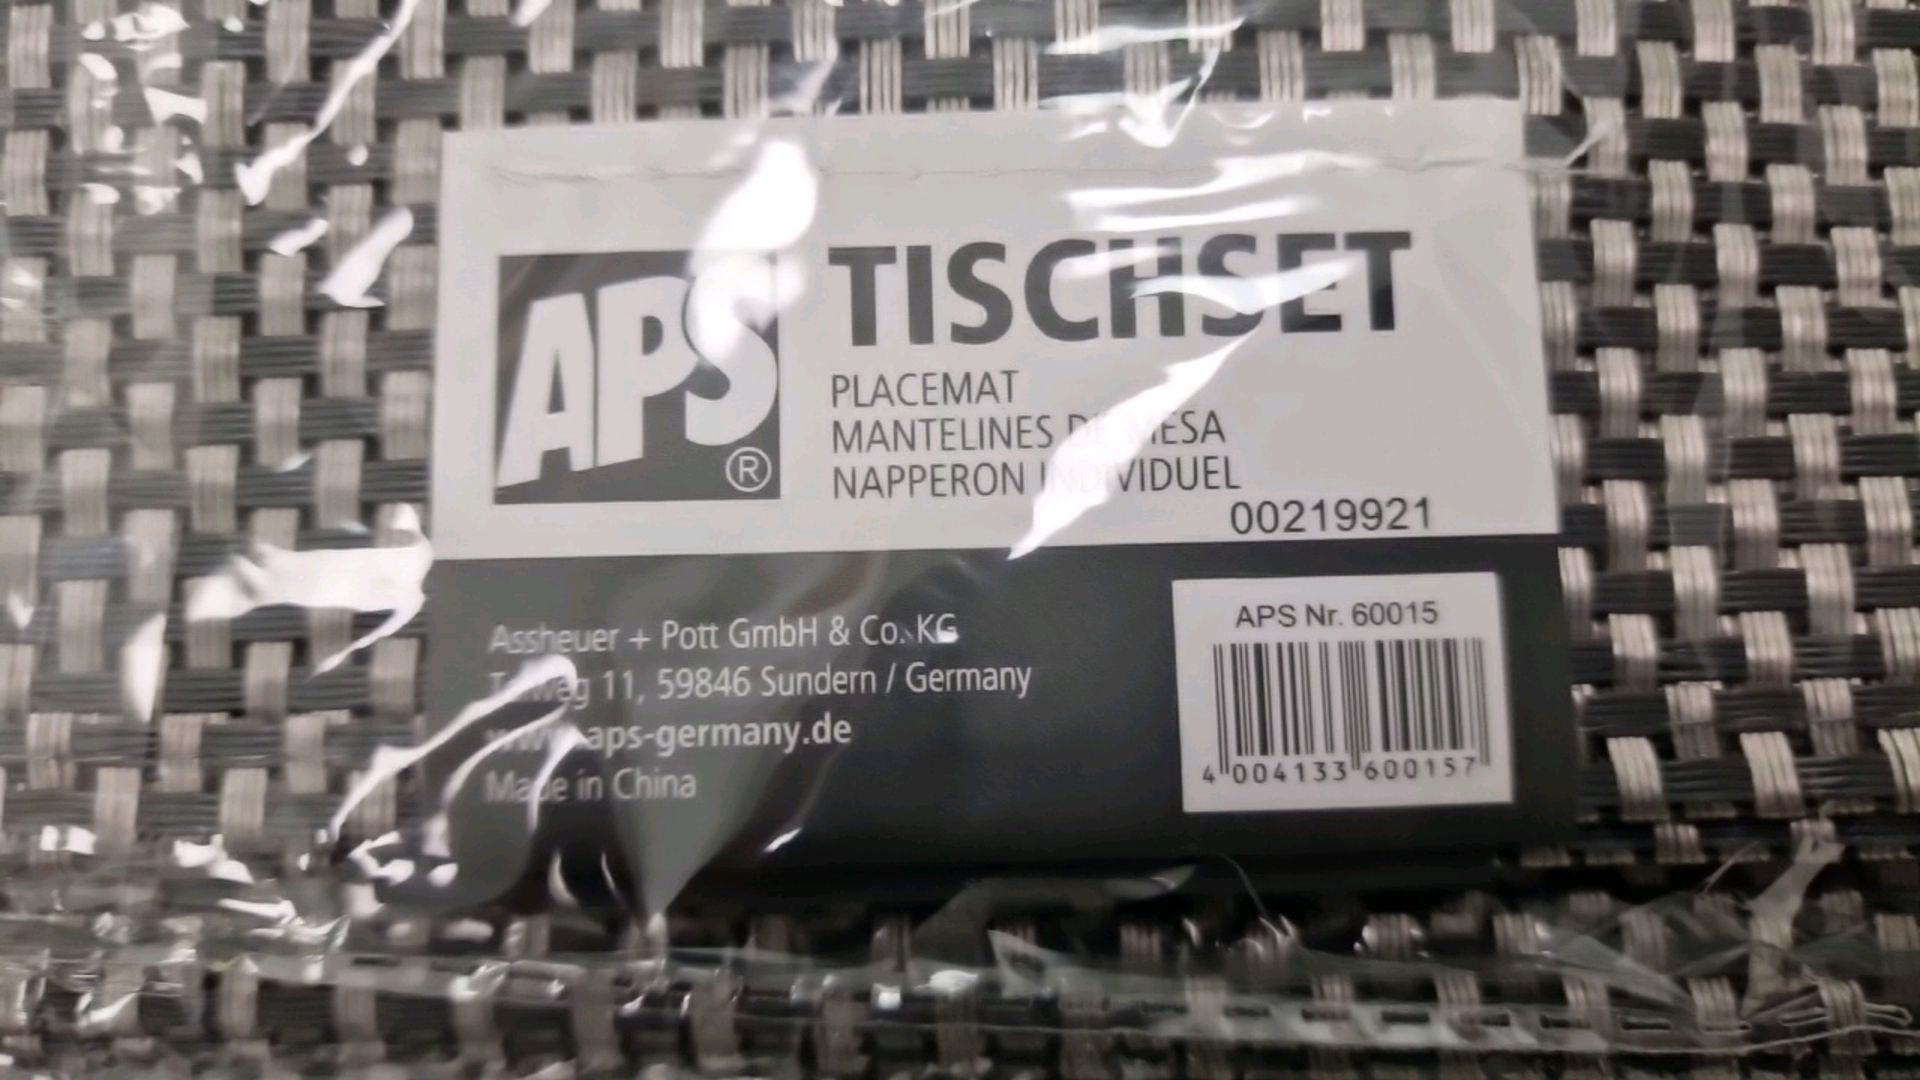 APS Tischset Placemat - Image 4 of 4